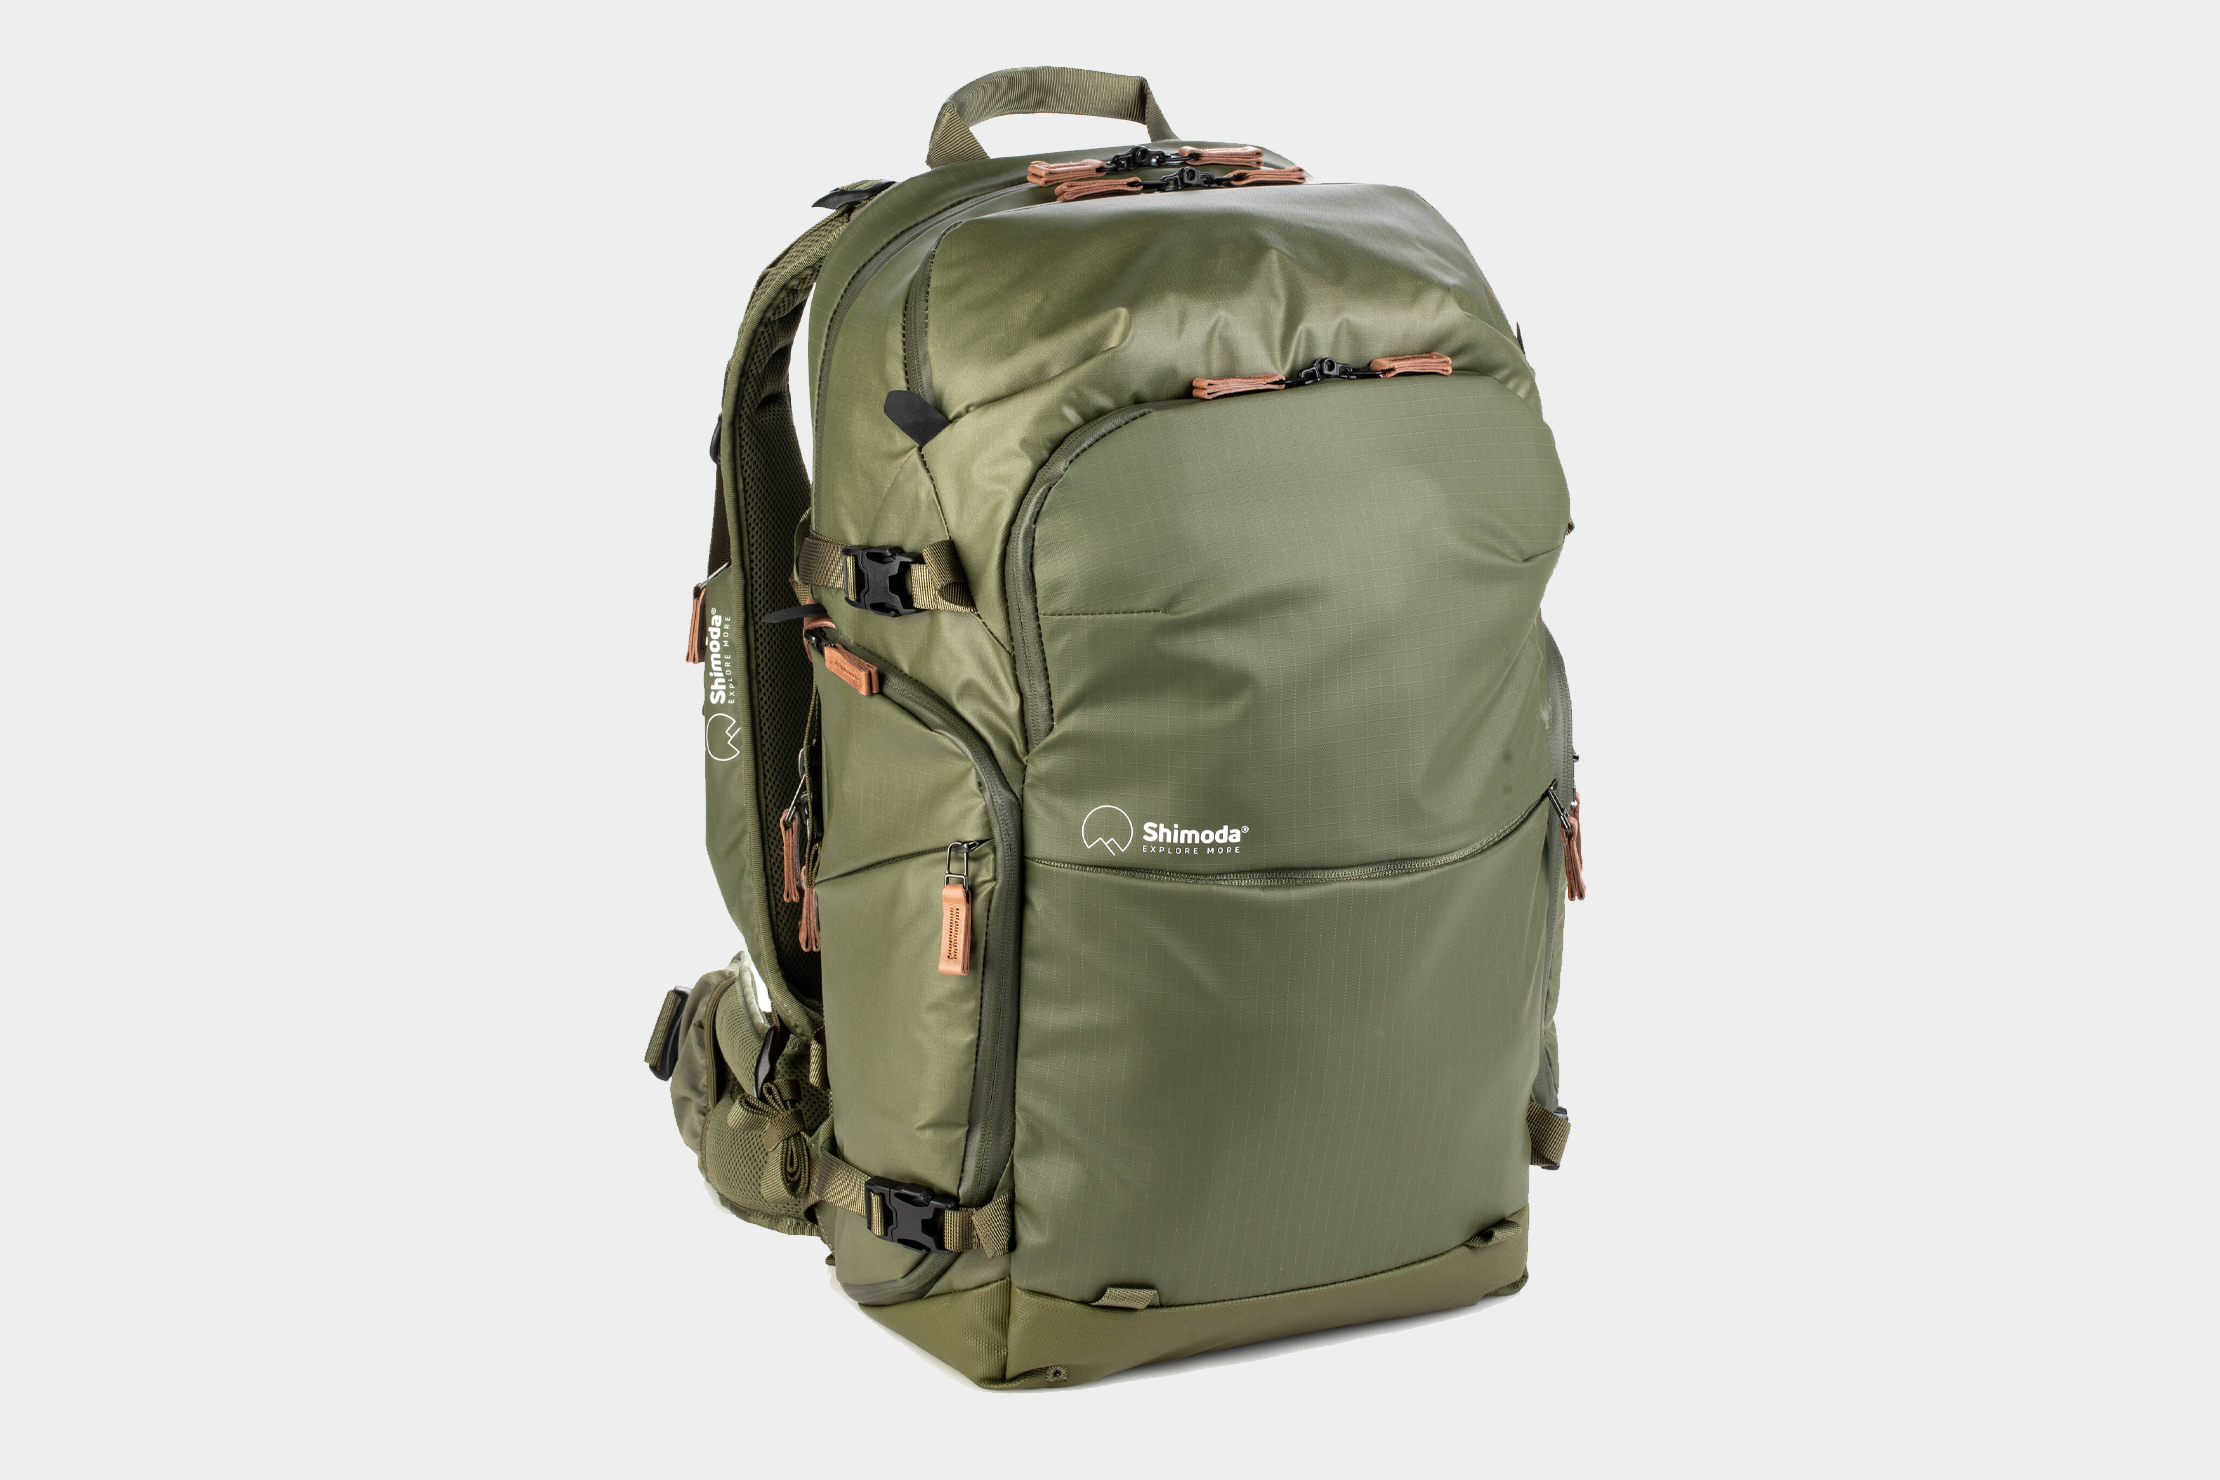 Shimoda Explore V2 35 Backpack Review | Pack Hacker